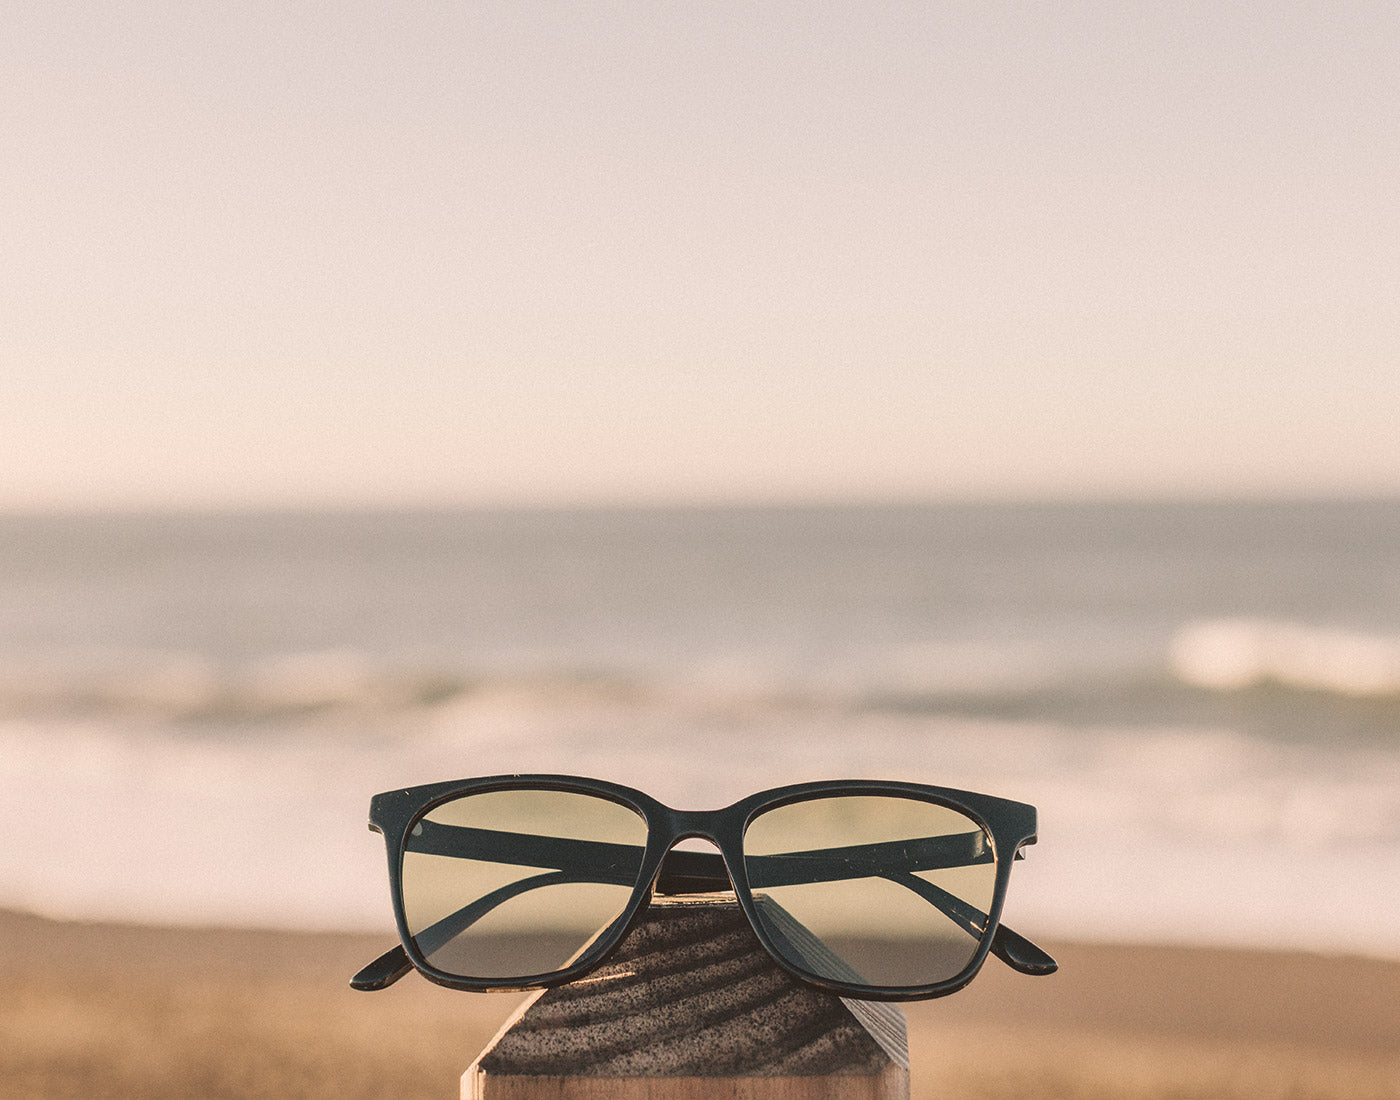 sunski ventana sunglasses on a rail by the beach